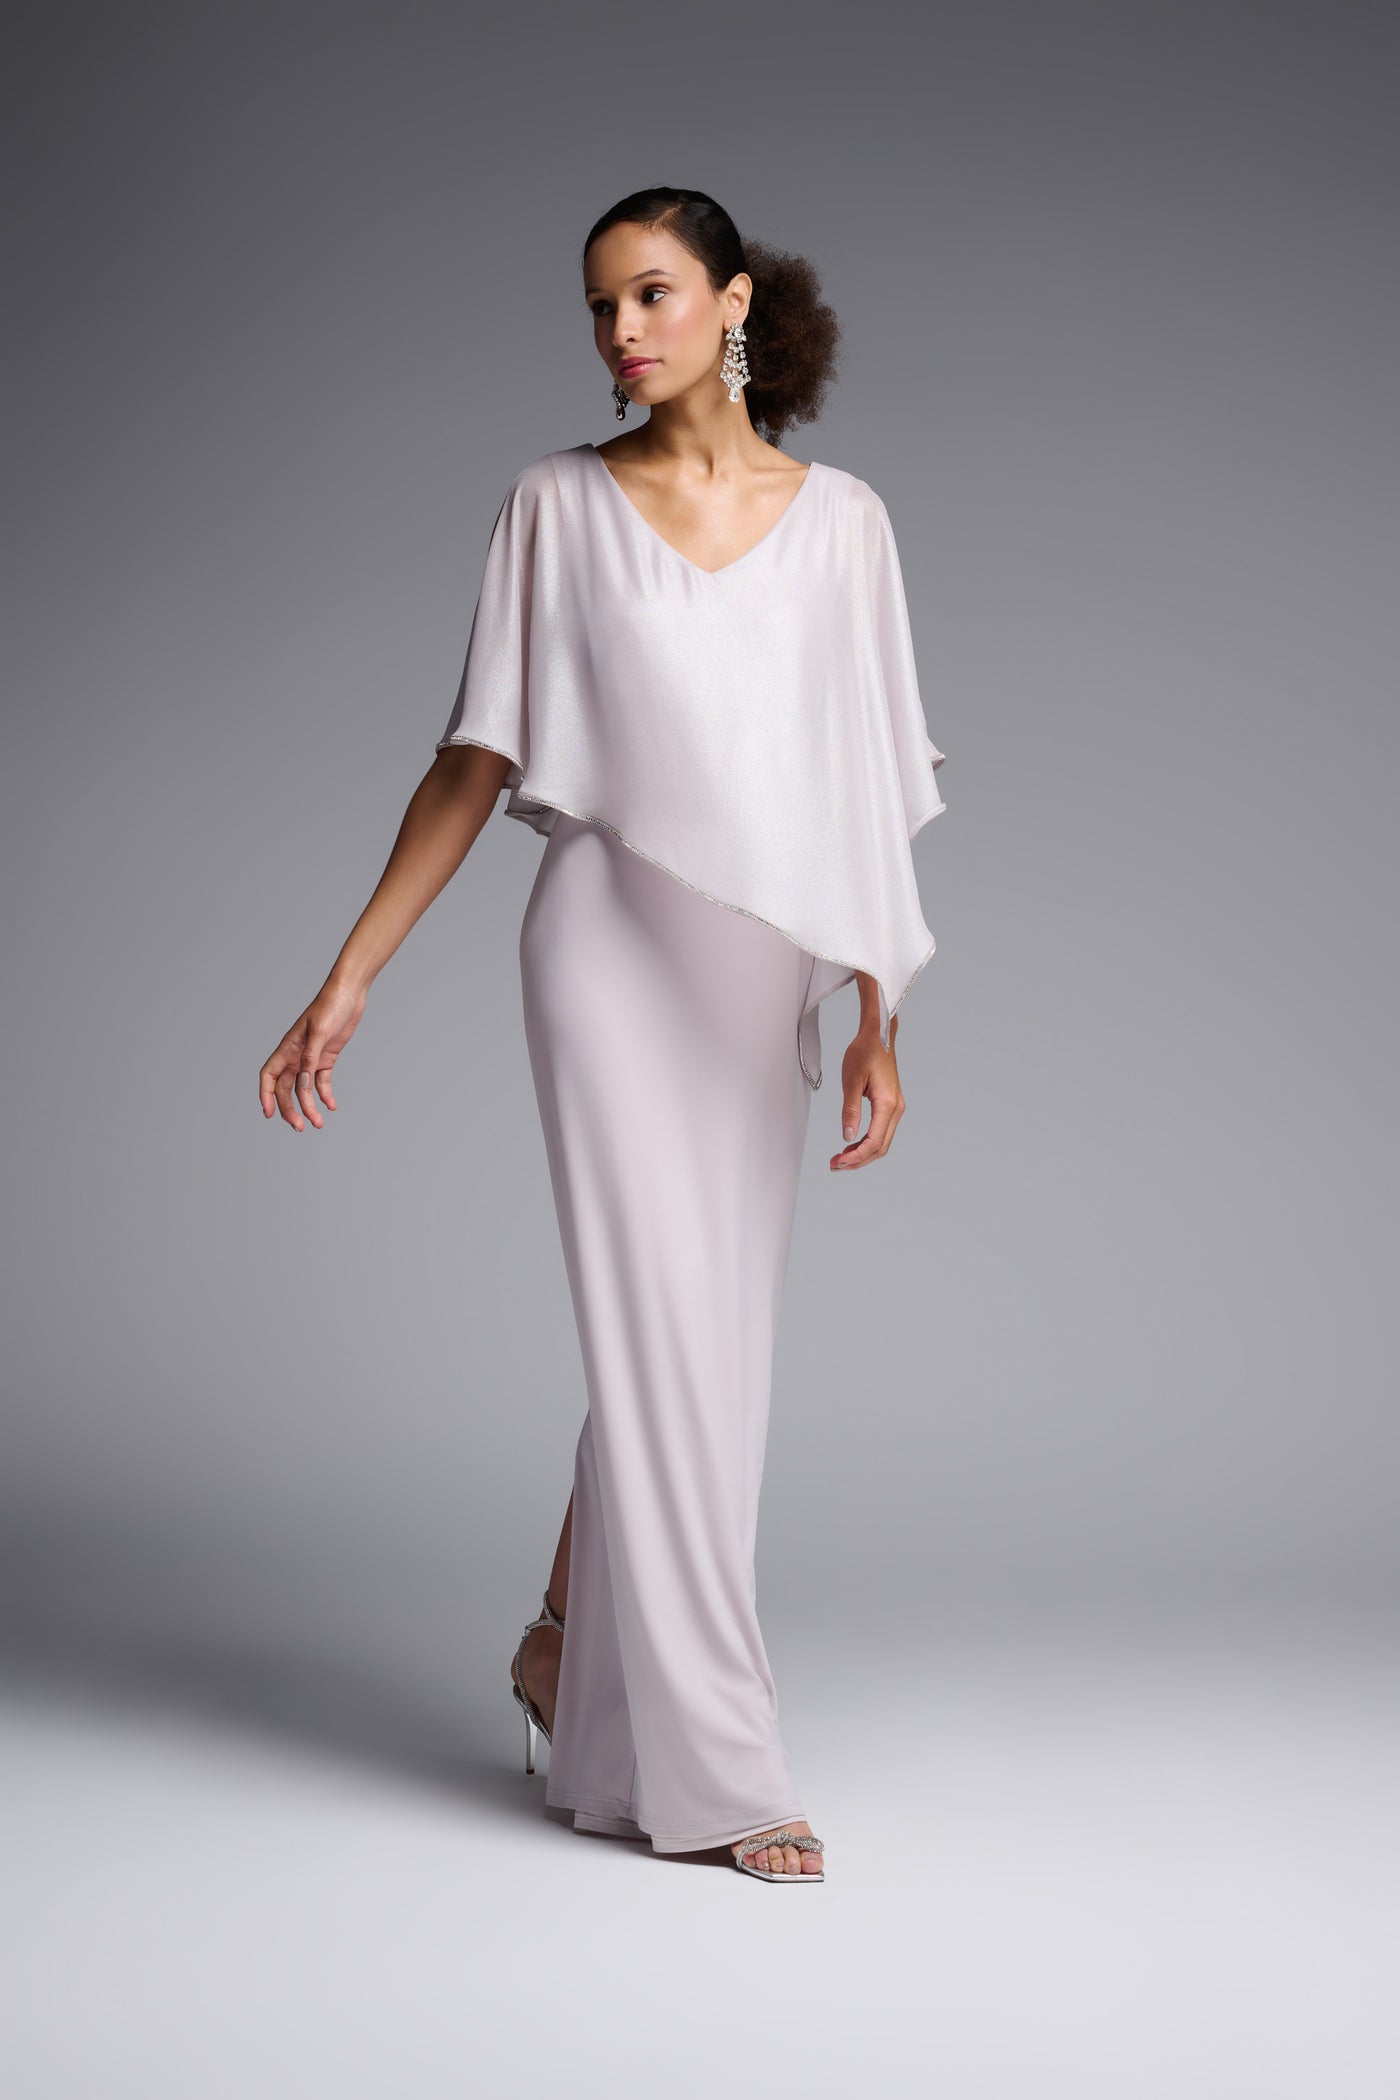 Joseph Ribkoff Cape Overlay Sheath Dress Style 231762 